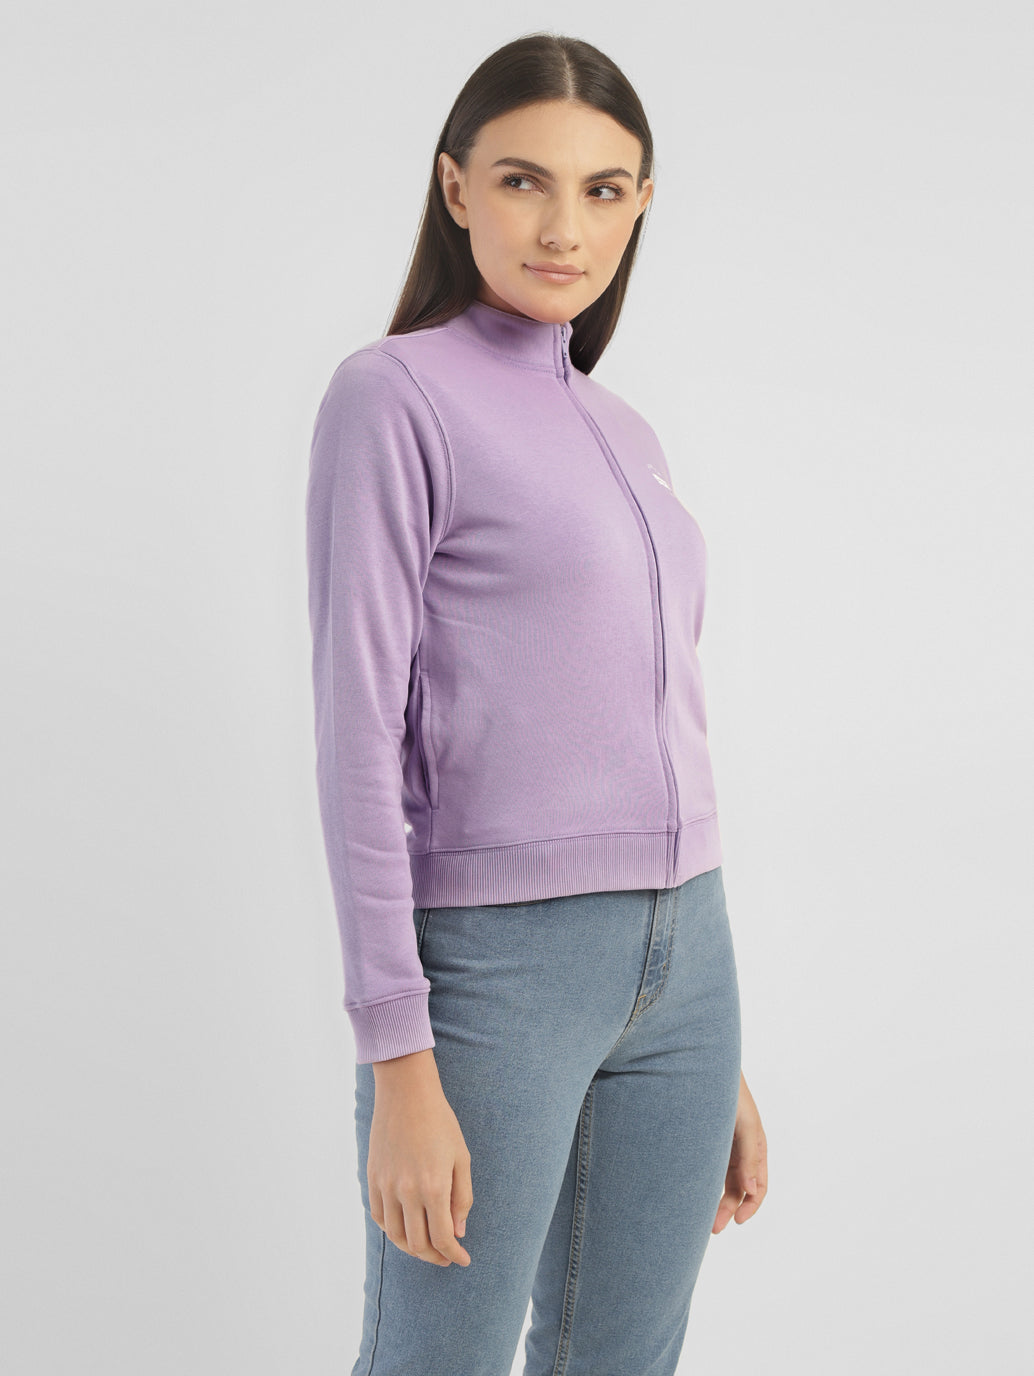 Women's Printed Purple Crew Neck Sweatshirt